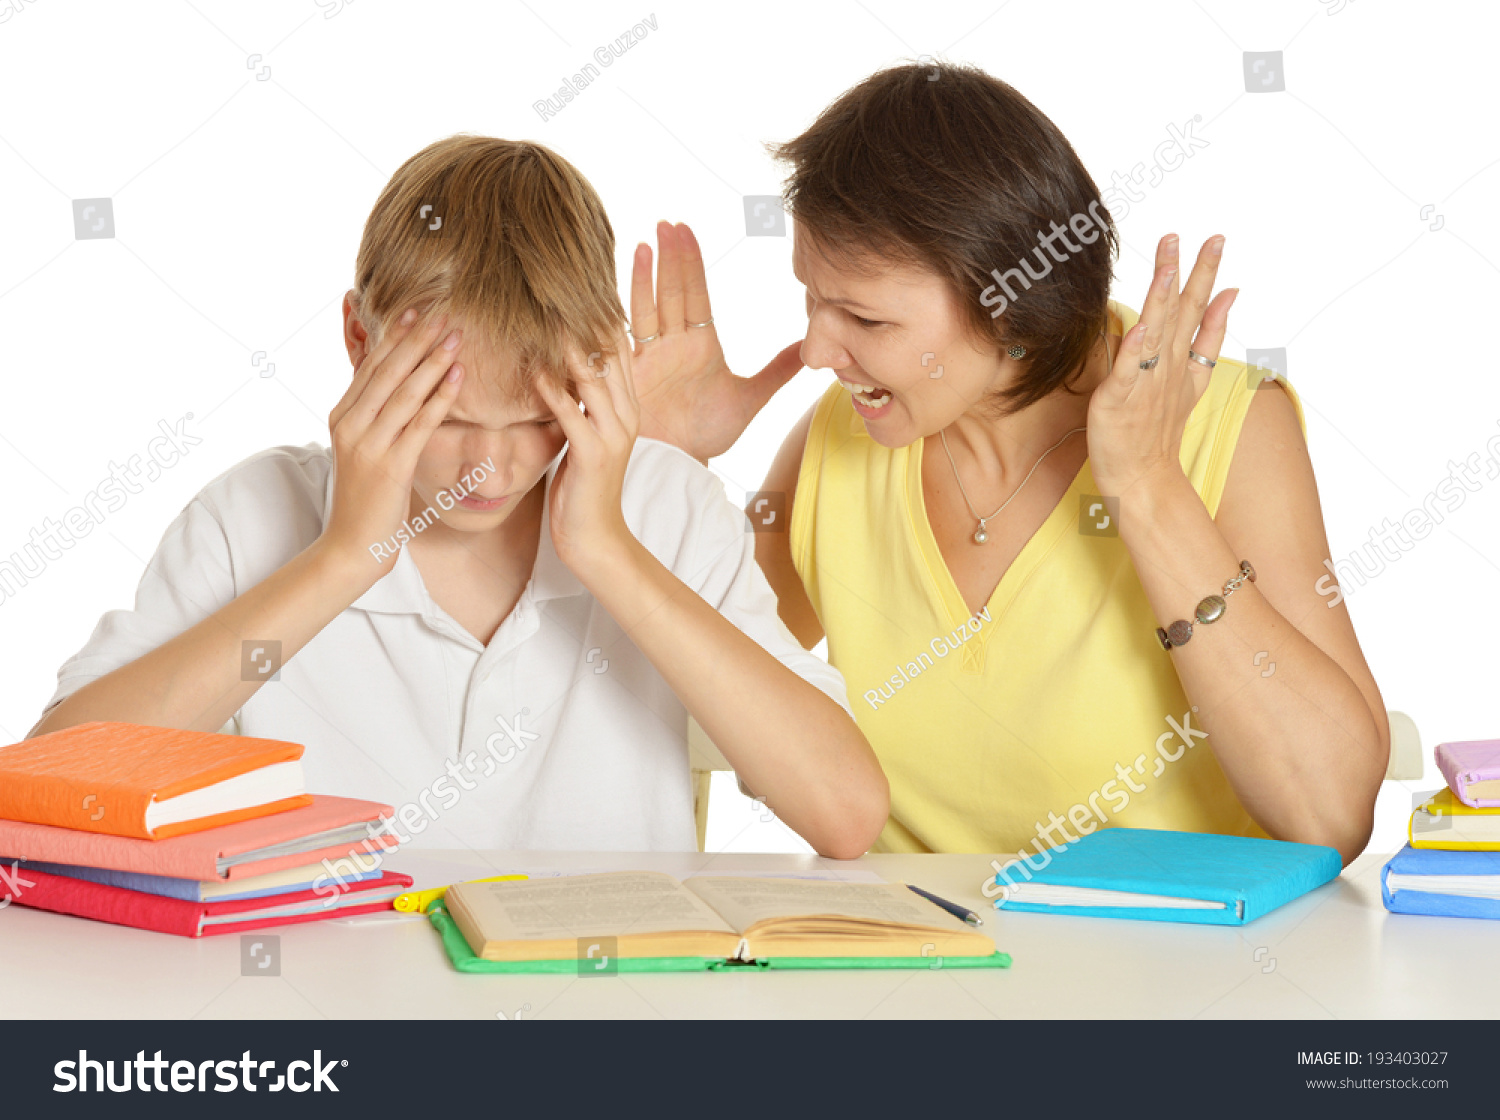 child gets angry doing homework